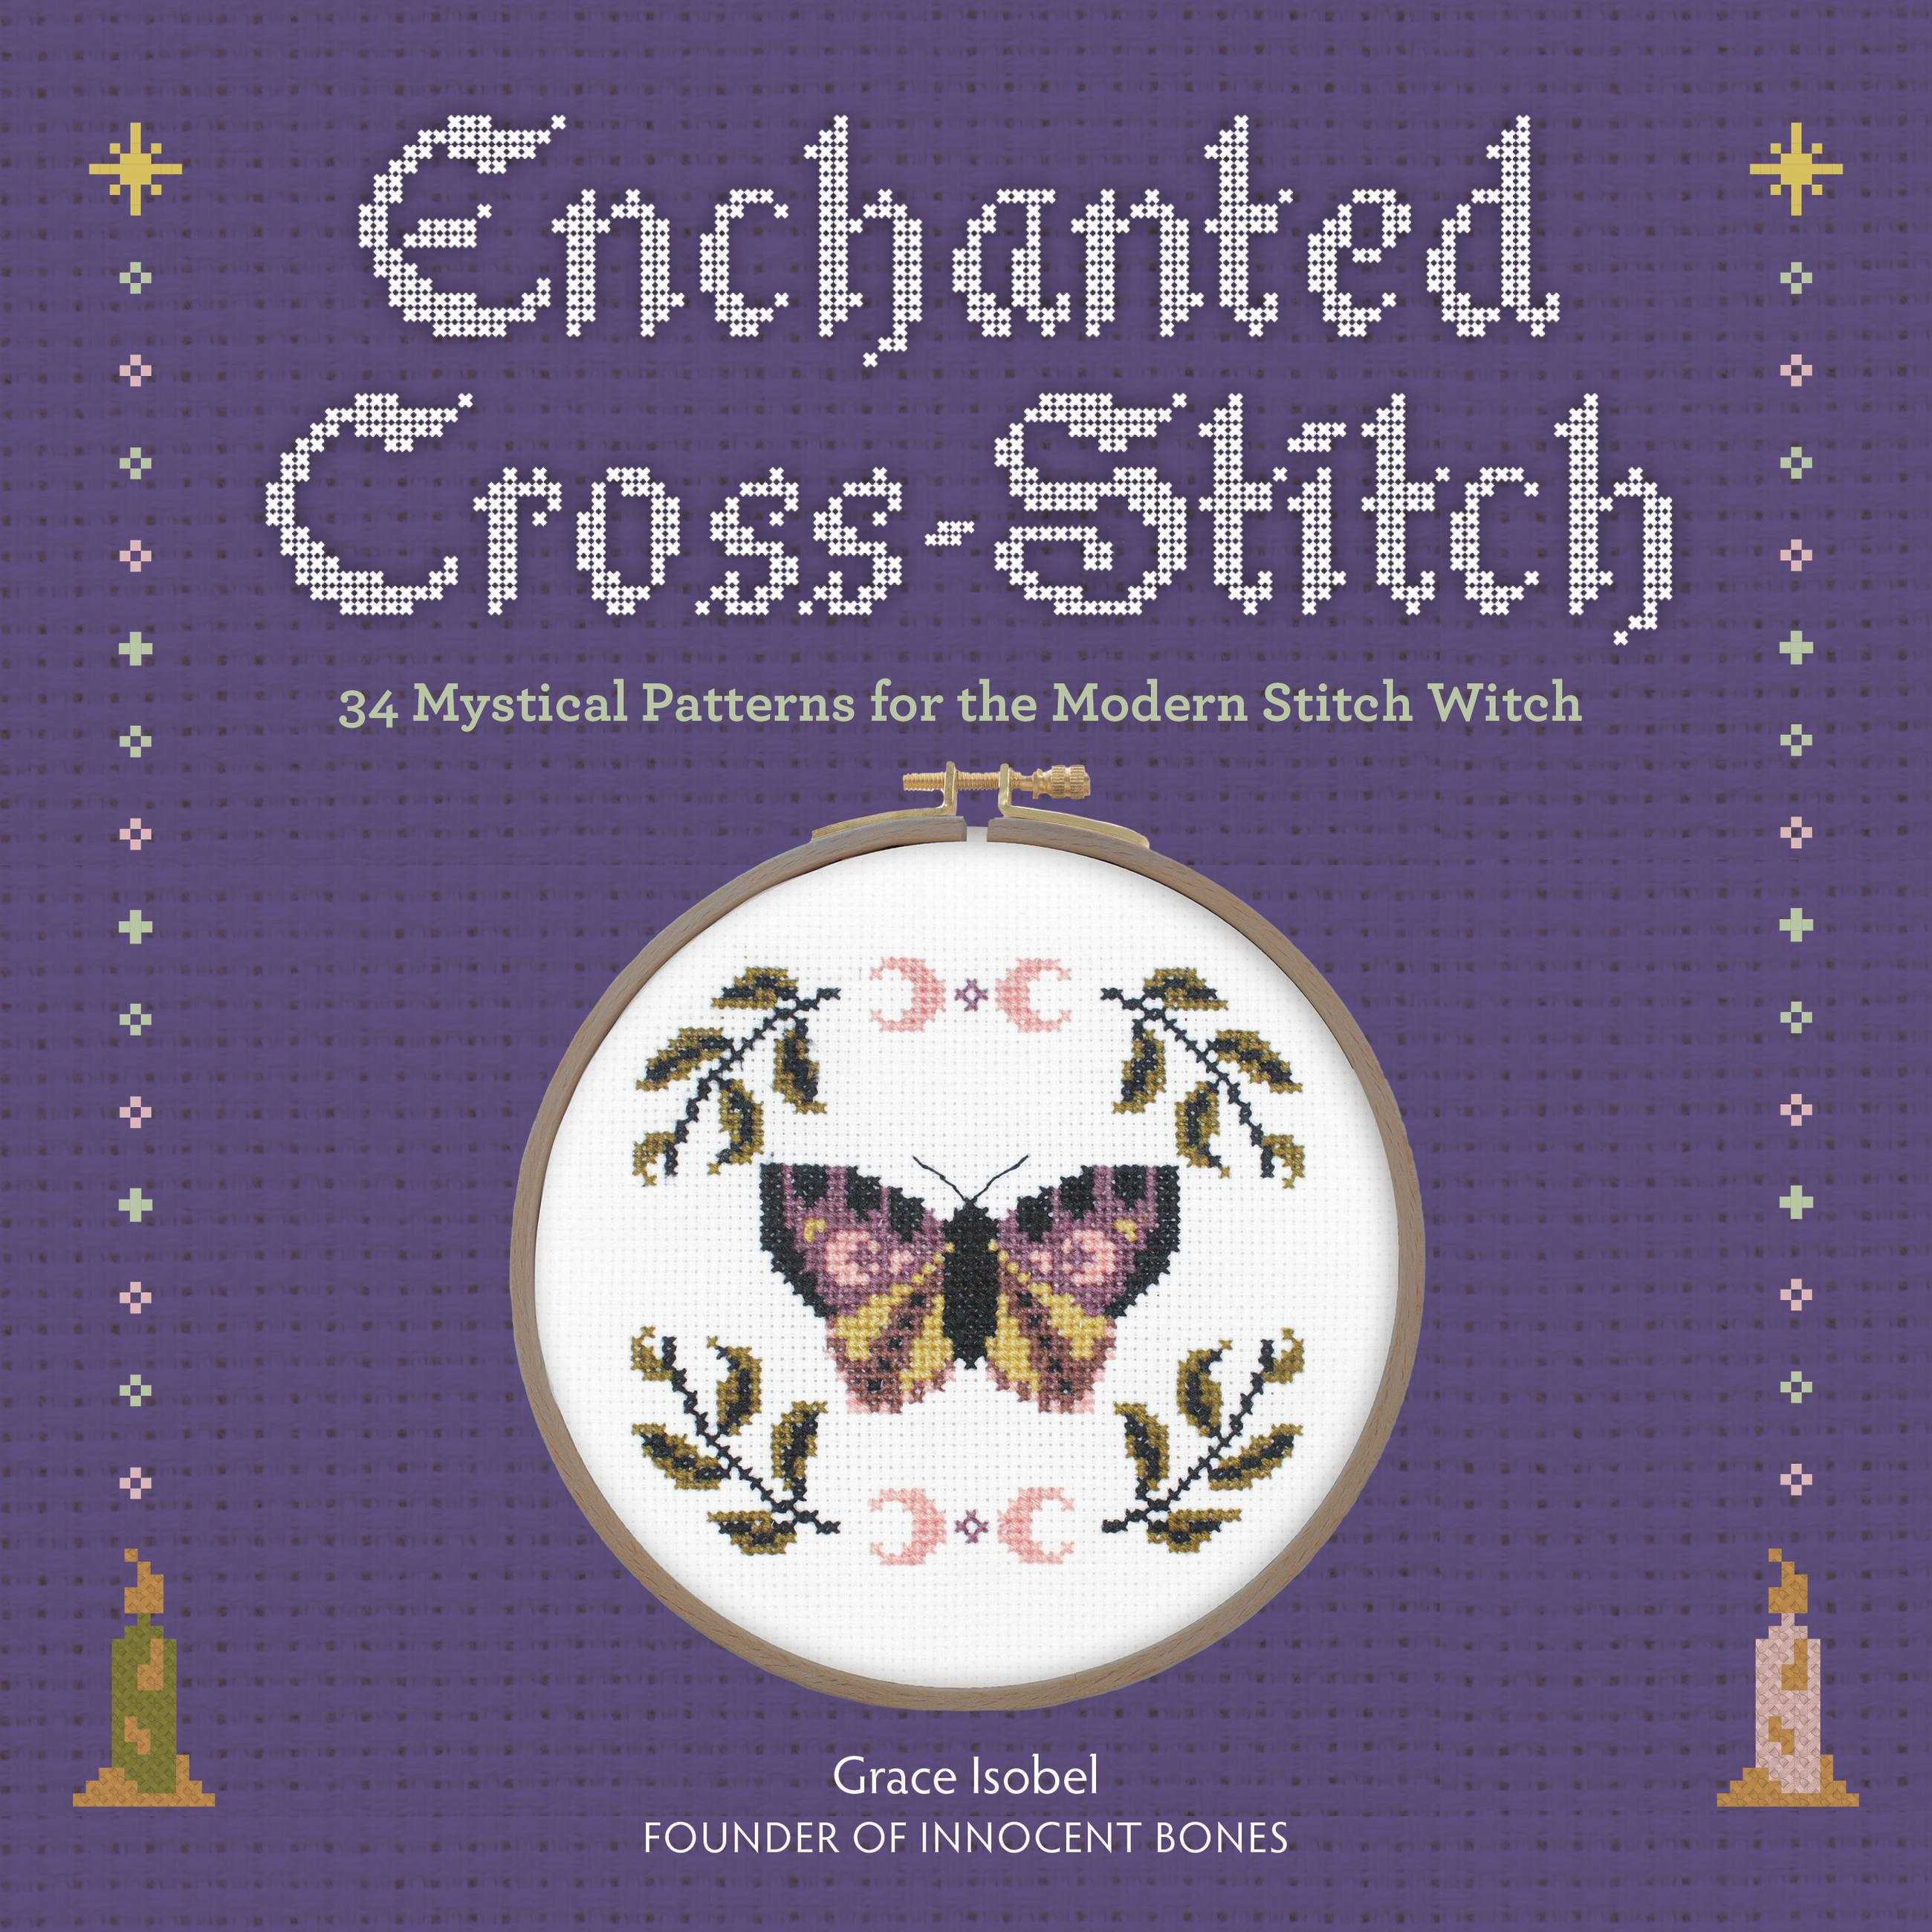 Enchanted Cross-Stitch